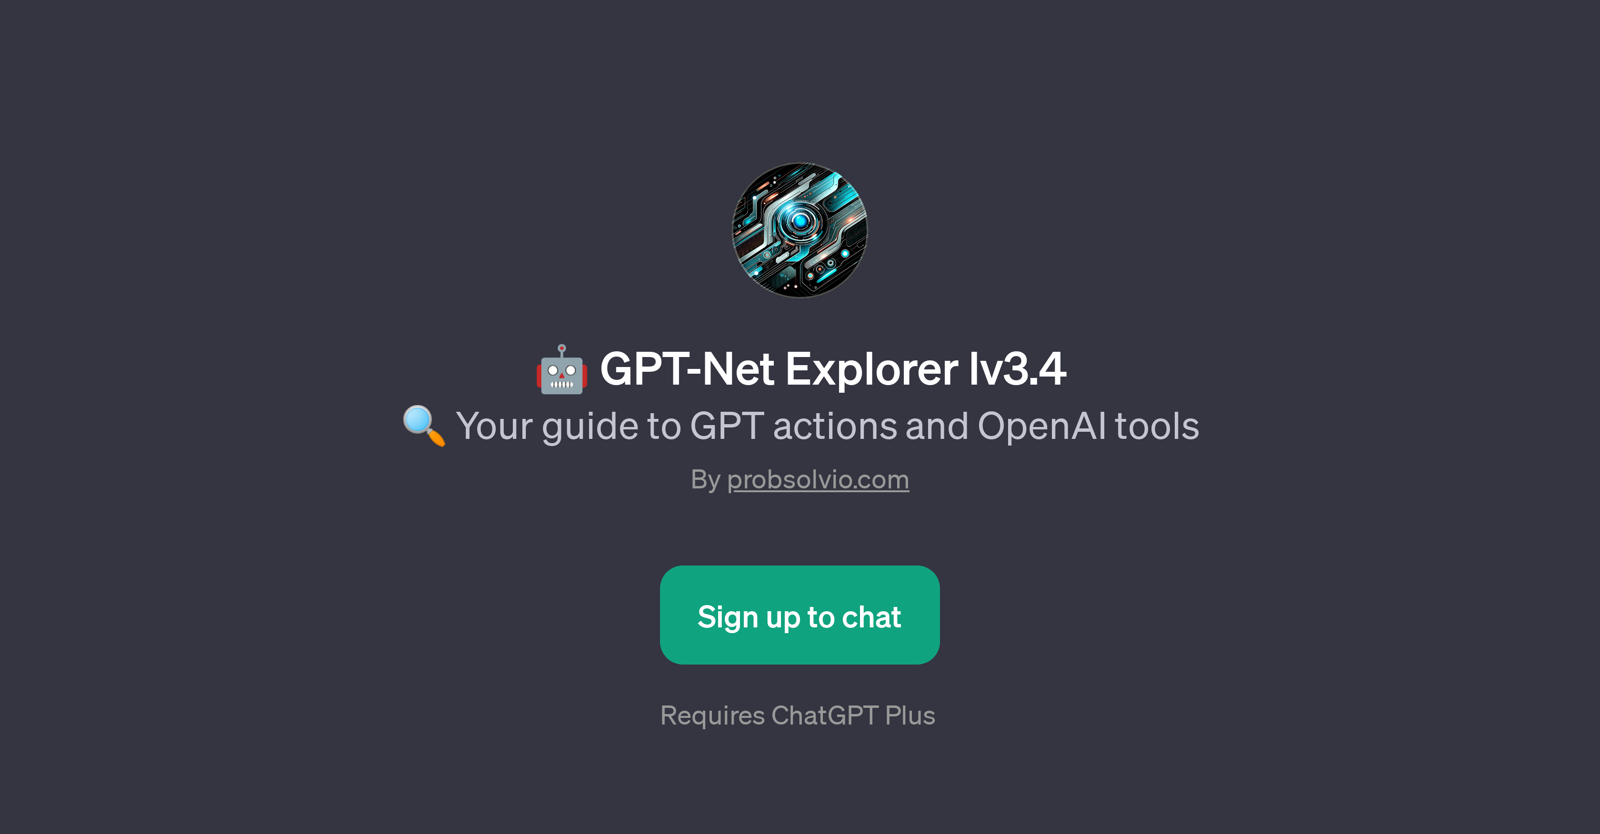 GPT-Net Explorer lv3.4 website